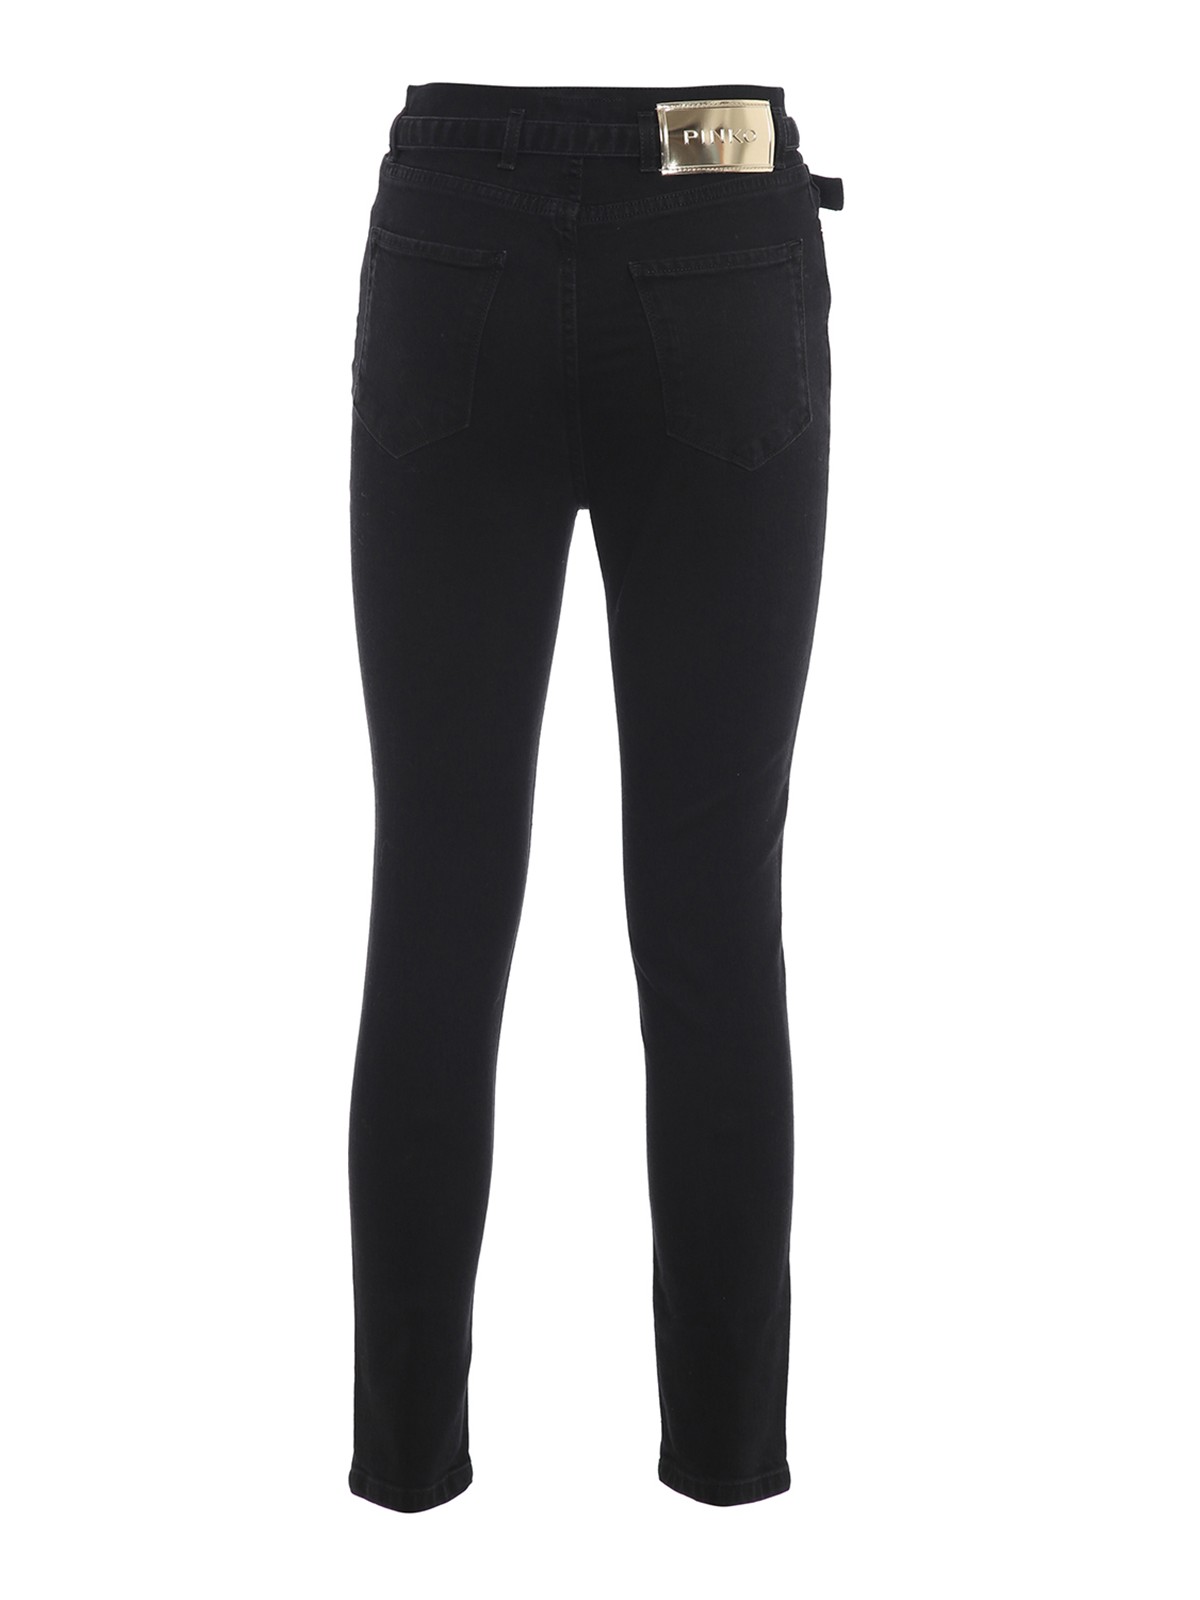 Skinny jeans Pinko - Susan jeans - 1J10GHY6FEZ99 | Shop online at iKRIX